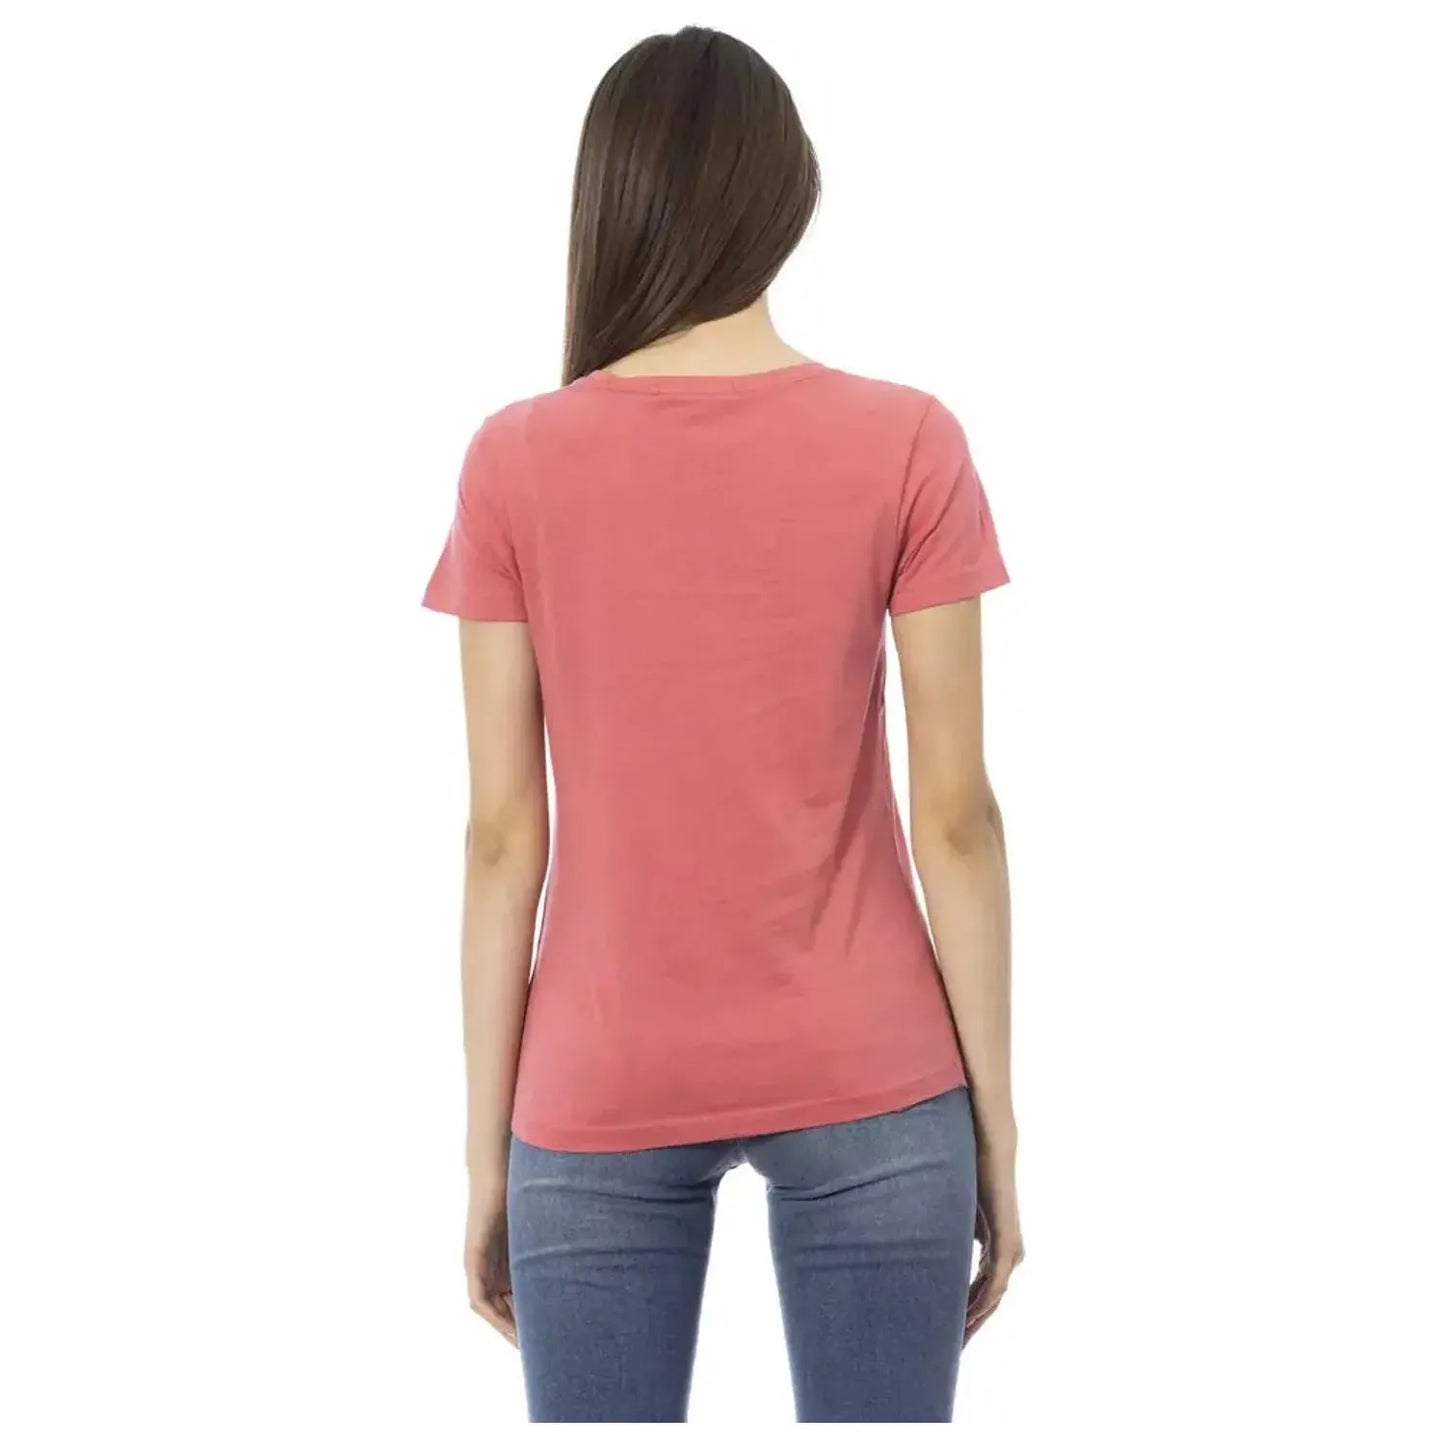 Trussardi Action Elegant Pink Cotton Blend Tee pink-cotton-tops-t-shirt-36